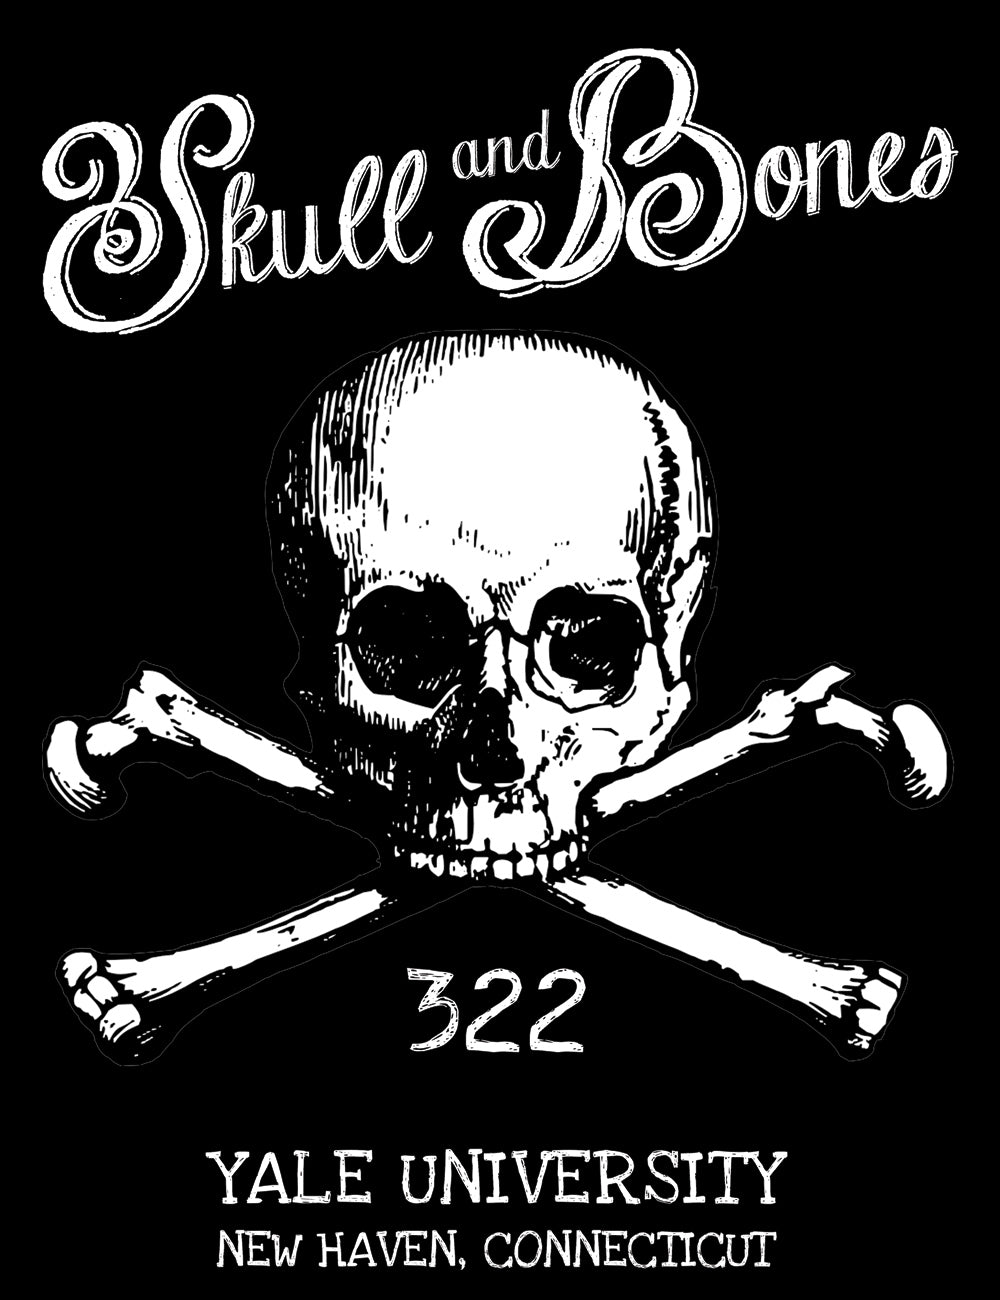 Buy Skull and Bones